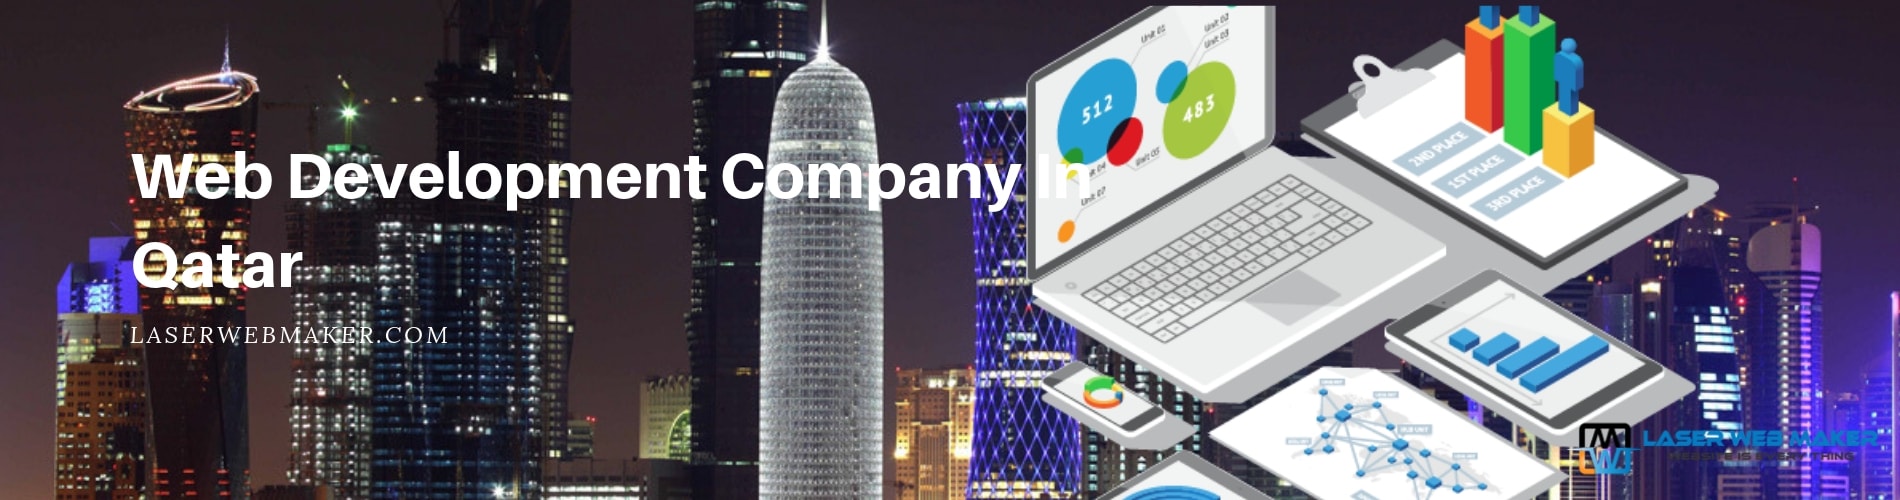 web development company in doha,qatar